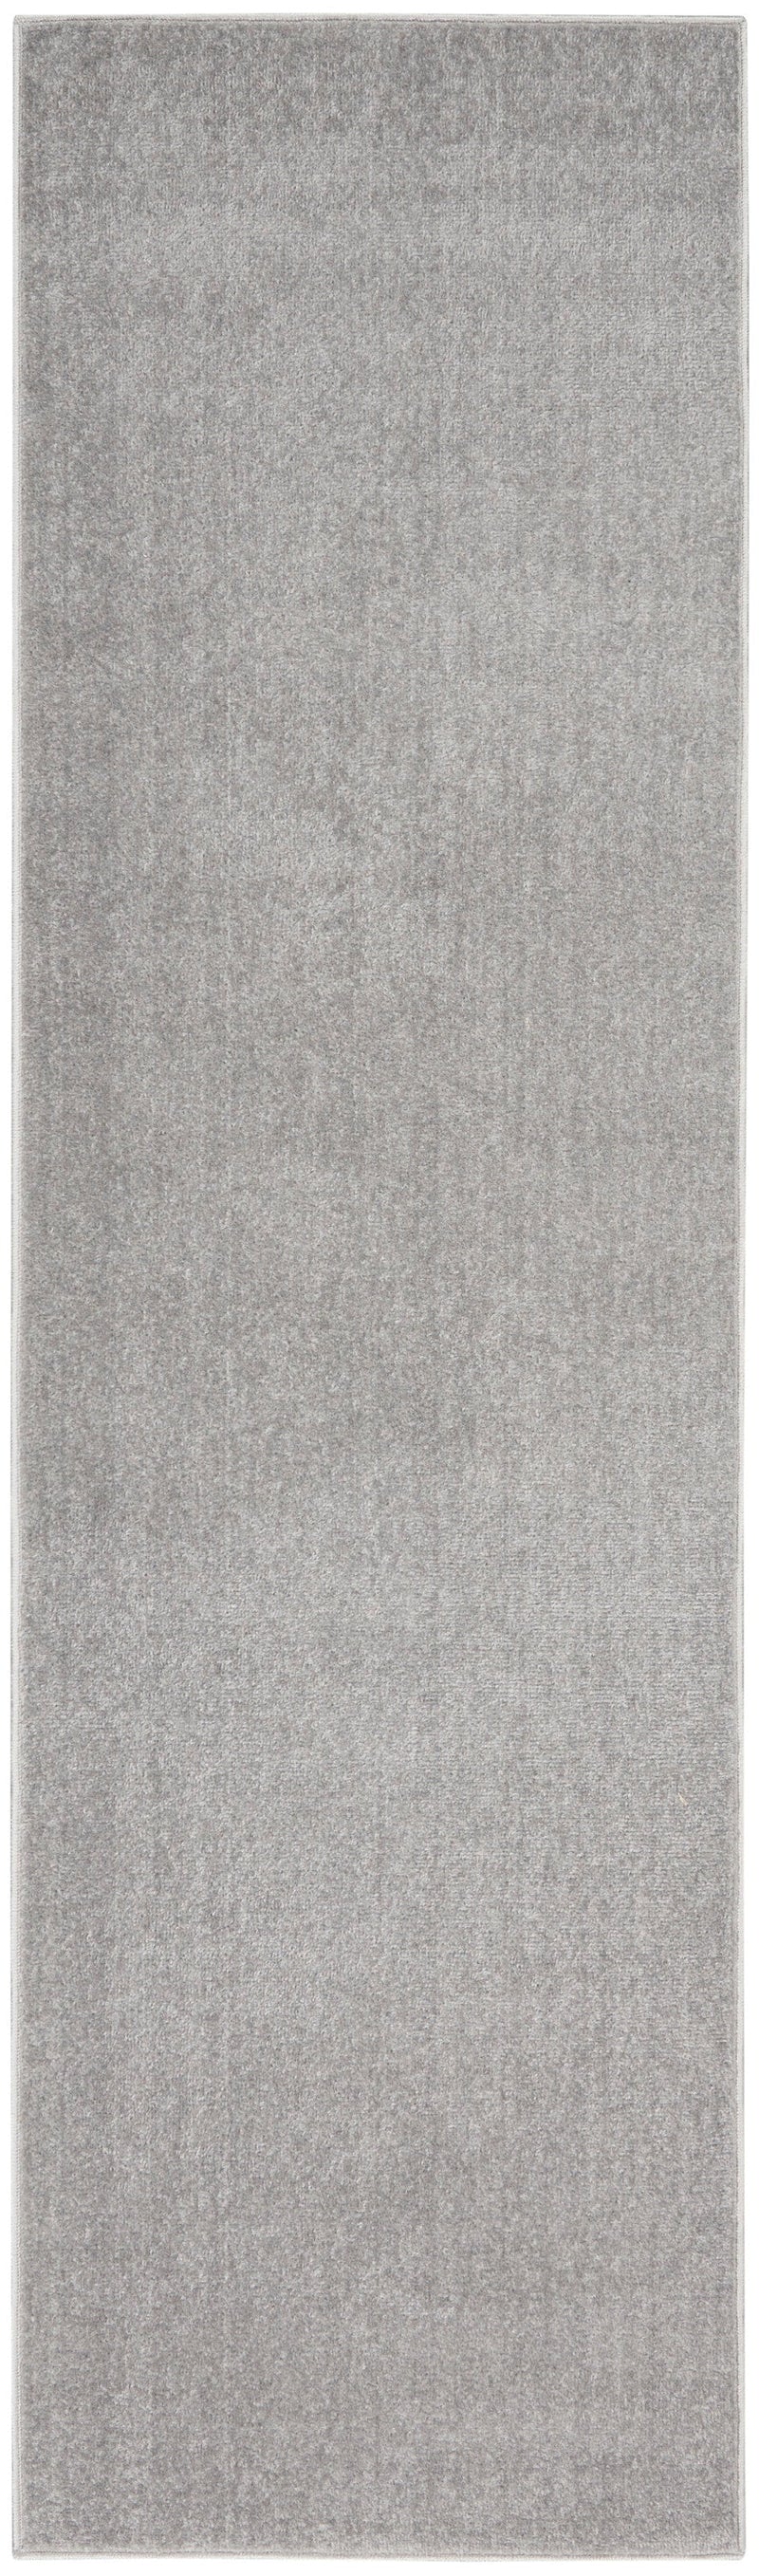 media image for nourison essentials silver grey rug by nourison 99446062369 redo 4 222